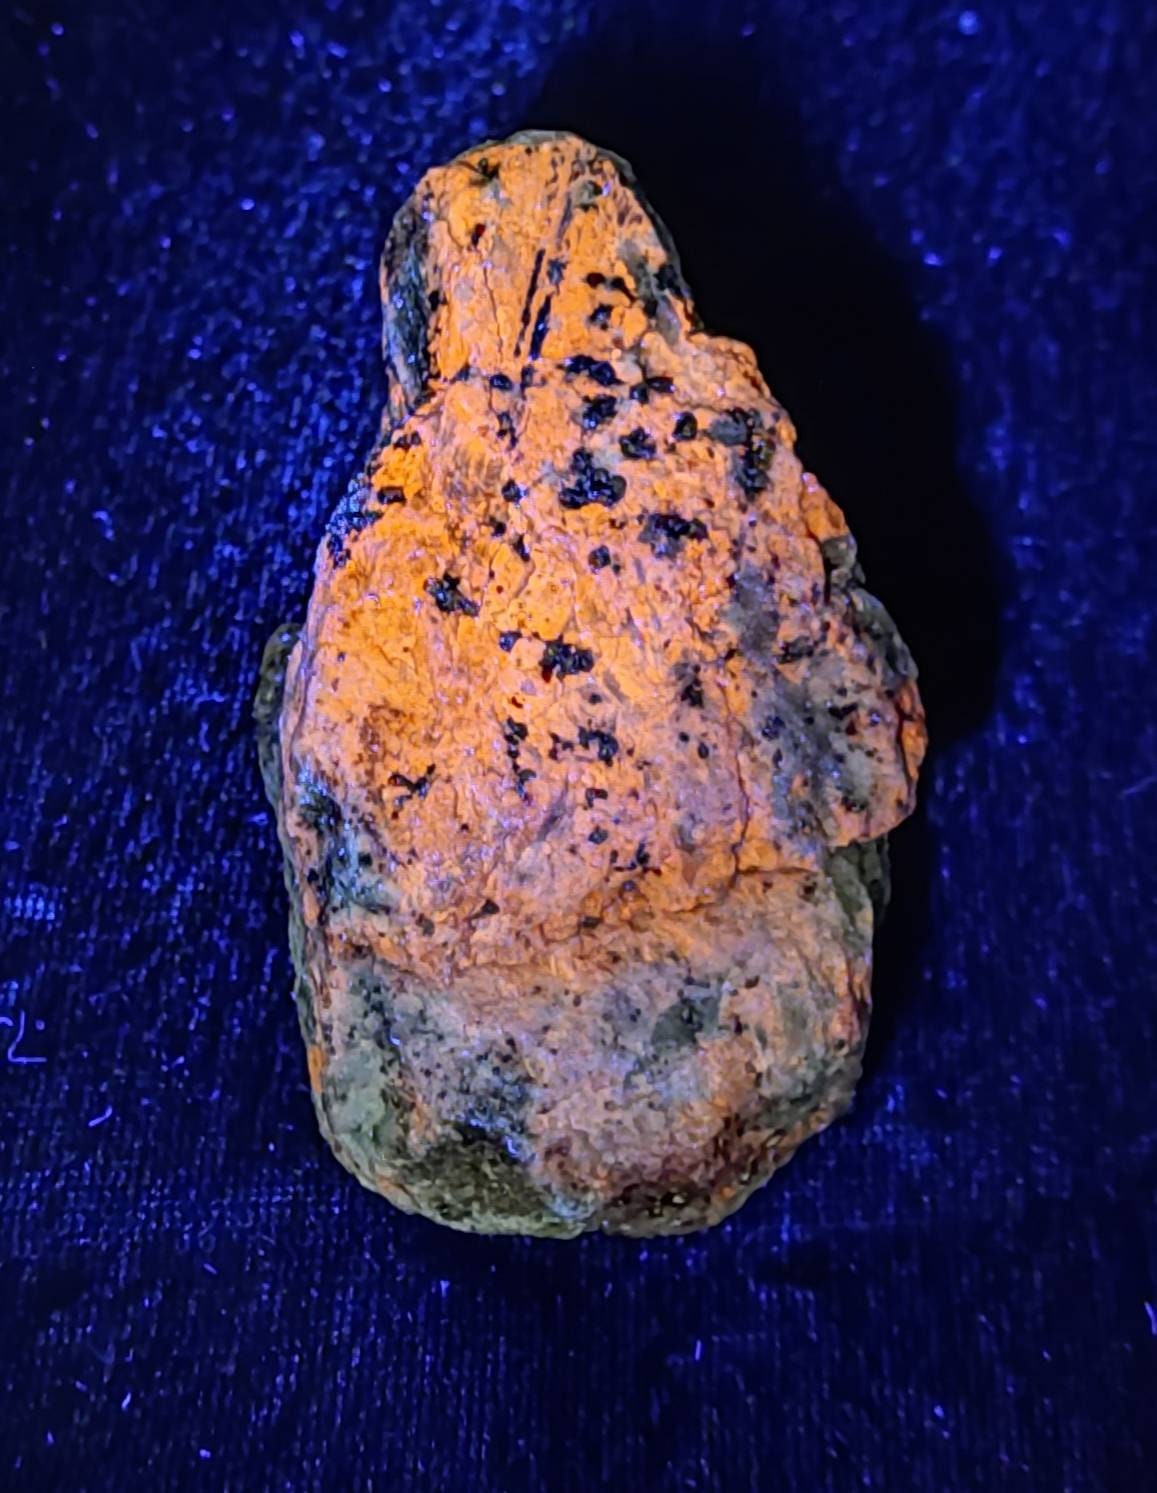 Fluorescent Minerals Lazurite in matrix with pyrite rough specimen 203 grams